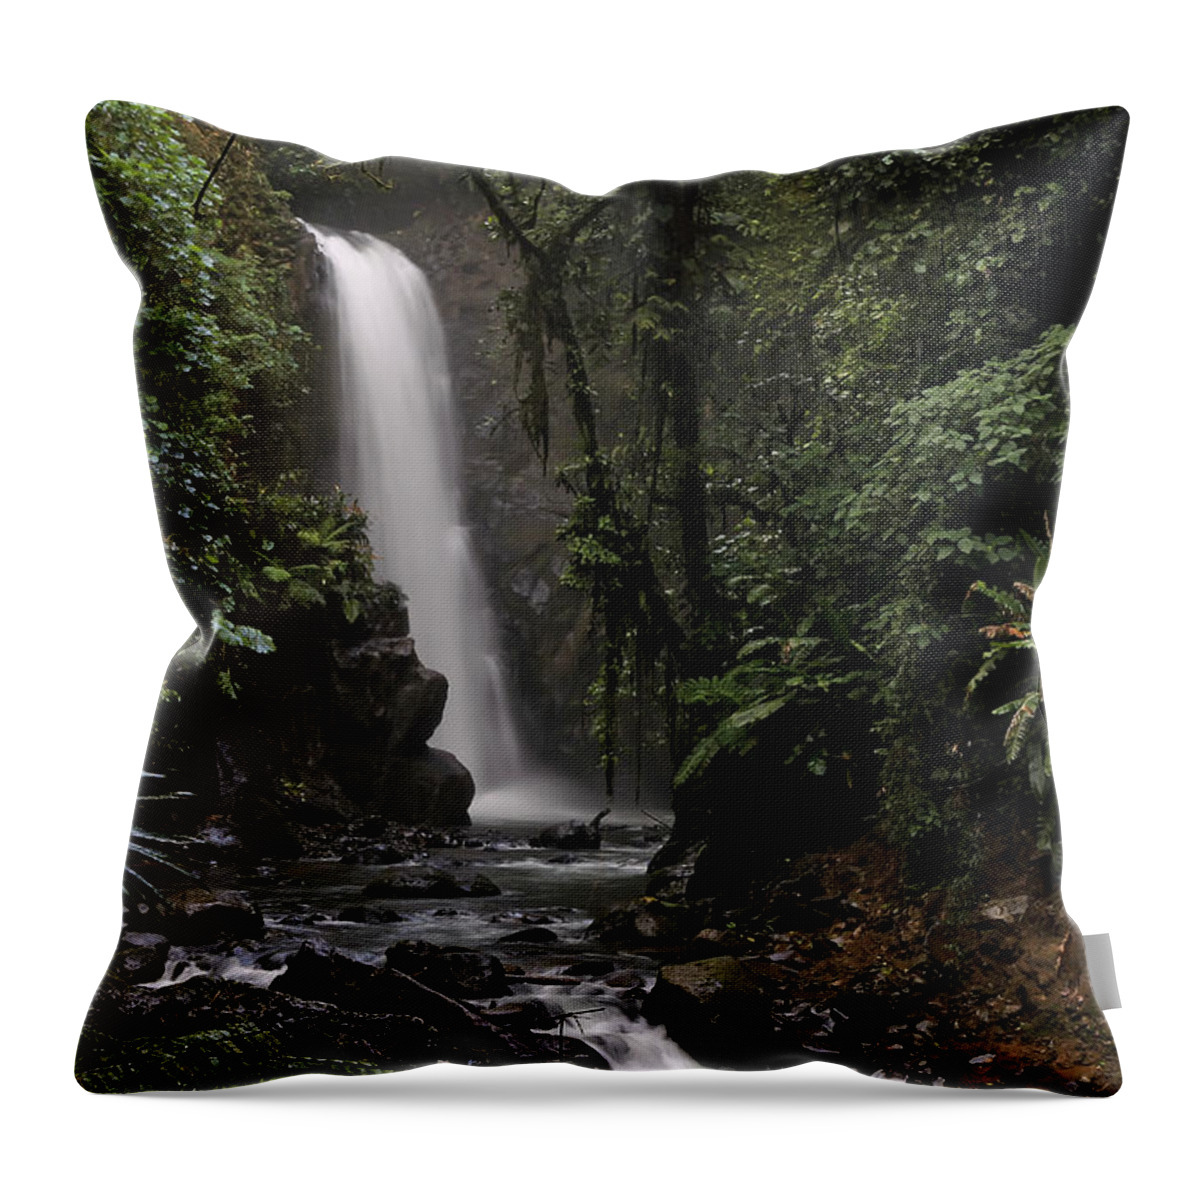 Waterfall Throw Pillow featuring the photograph Encantada Waterfall Costa Rica by Teresa Zieba